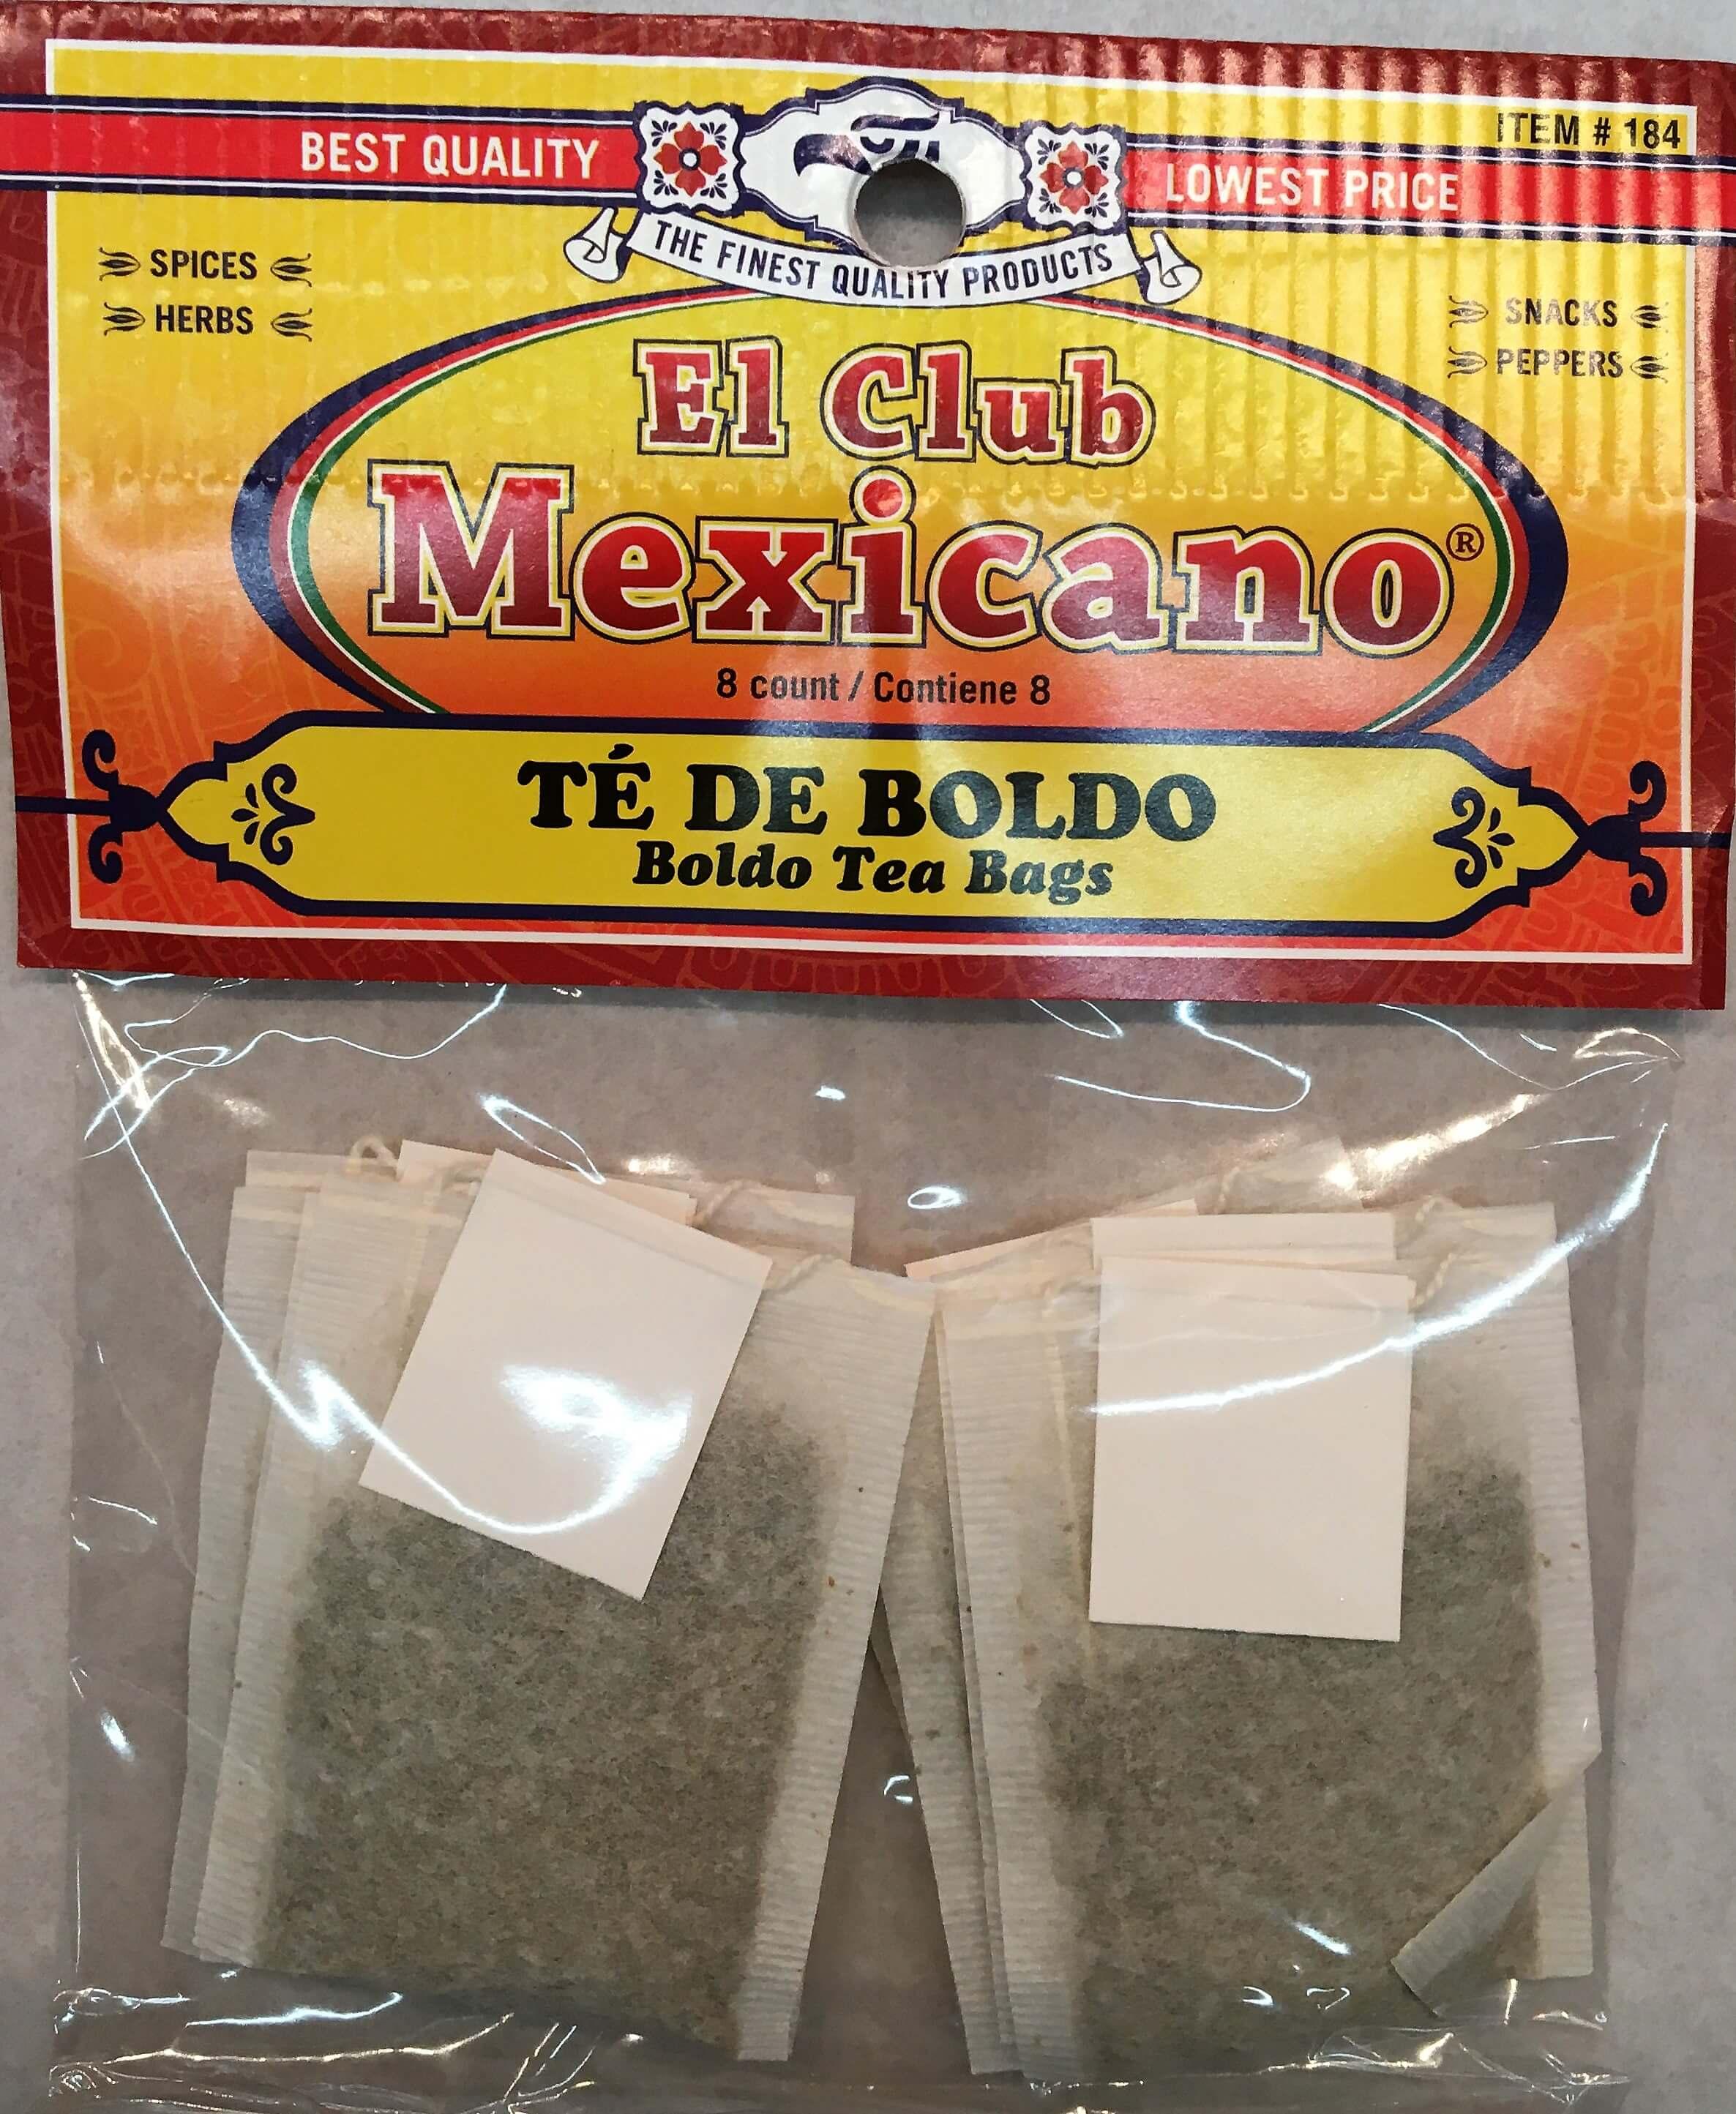 El Club Mexicano - Boldo Tea Bags 8 count.